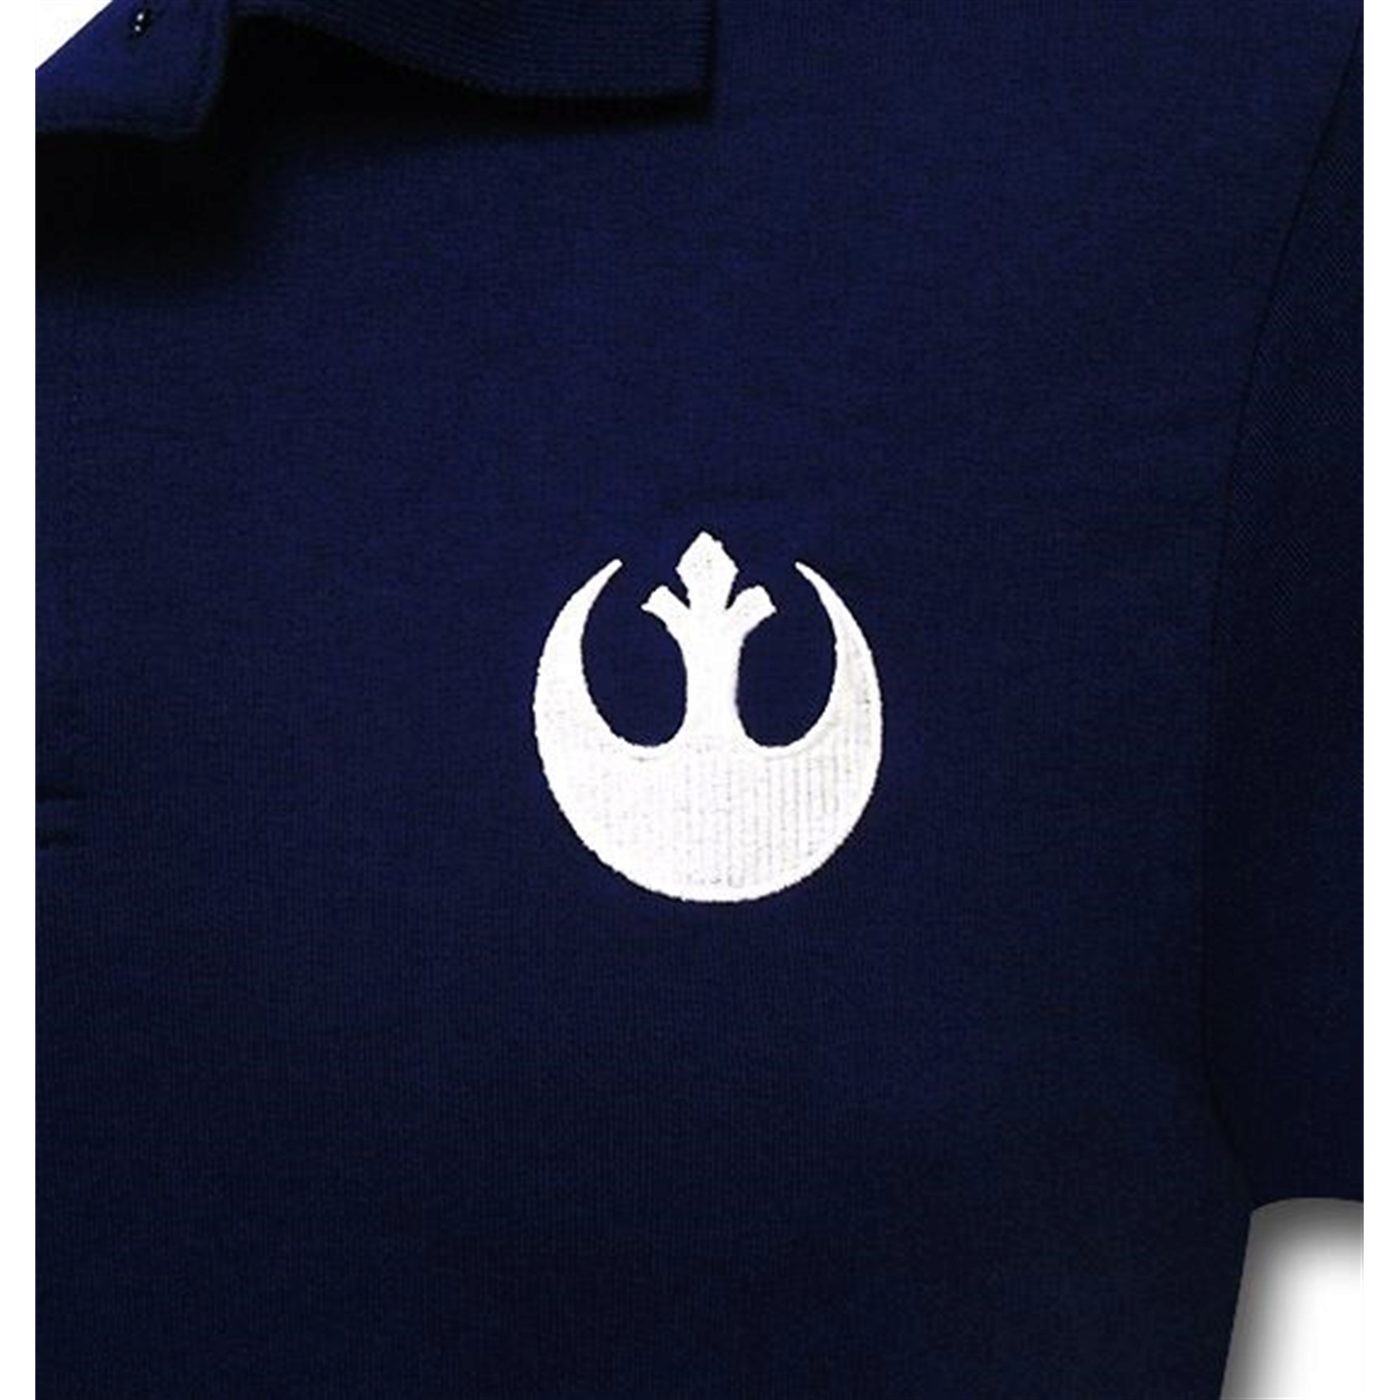 Star Wars Rebel Symbol Navy Polo Shirt